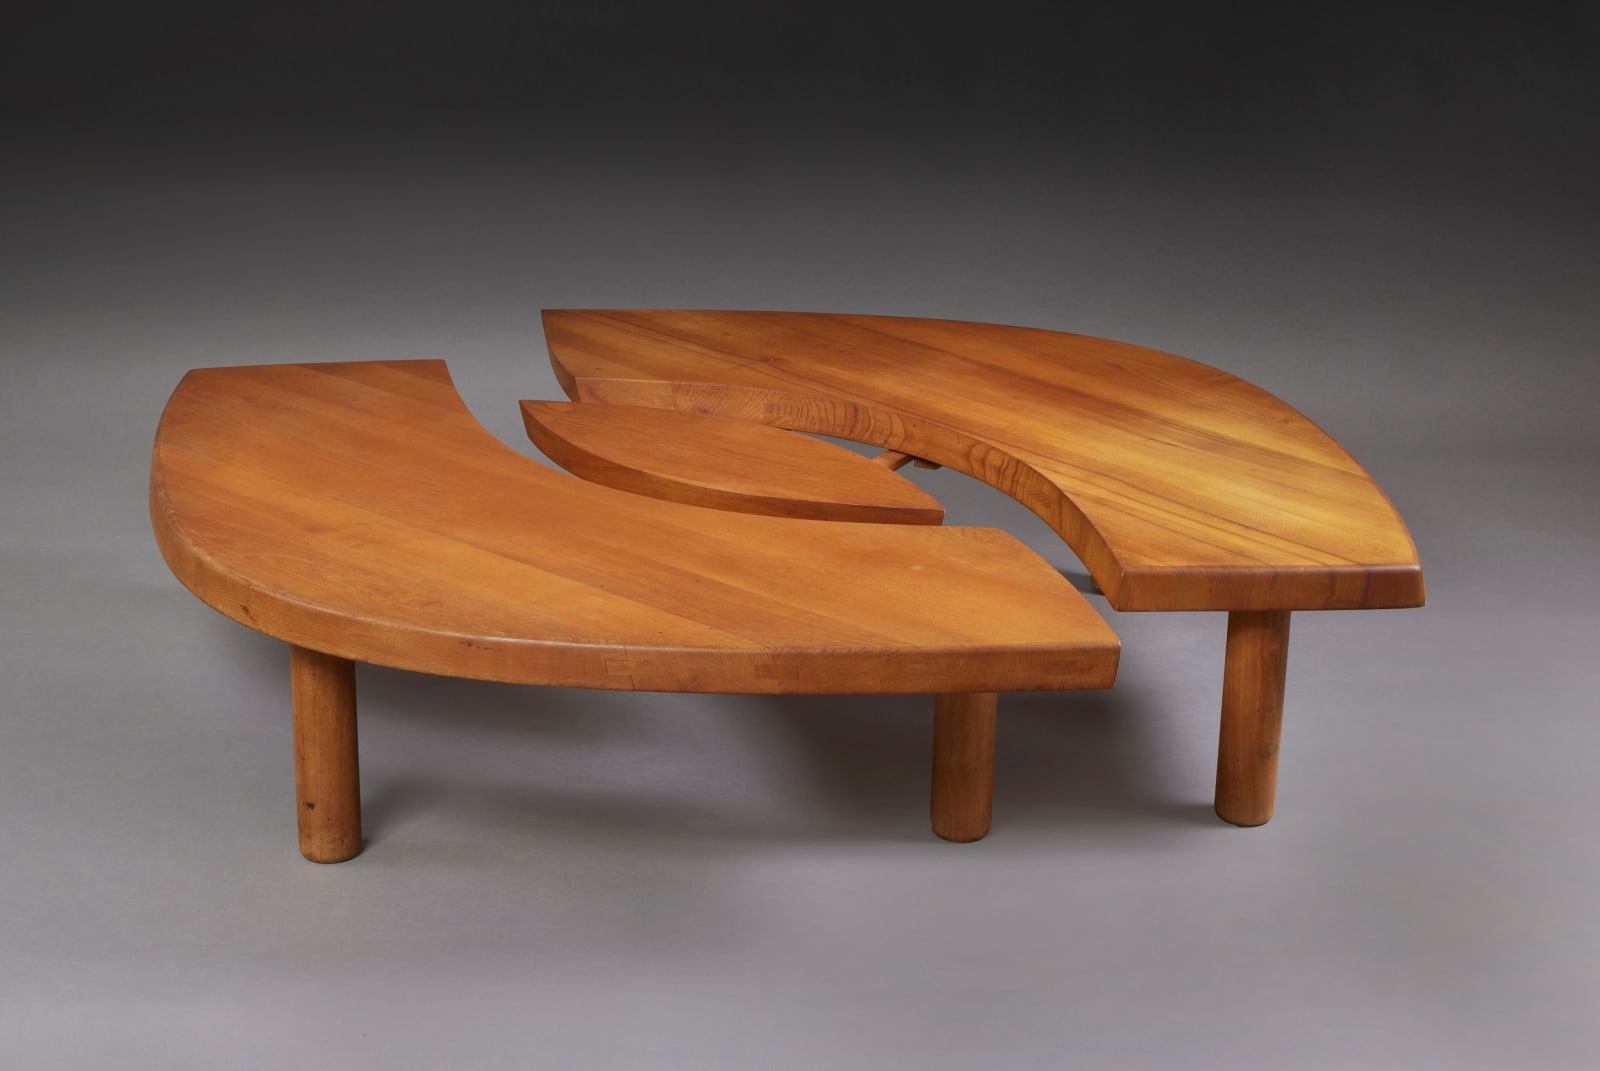 Pierre Chapo, T22 'Oeil' low table, c. 1960 (1972)